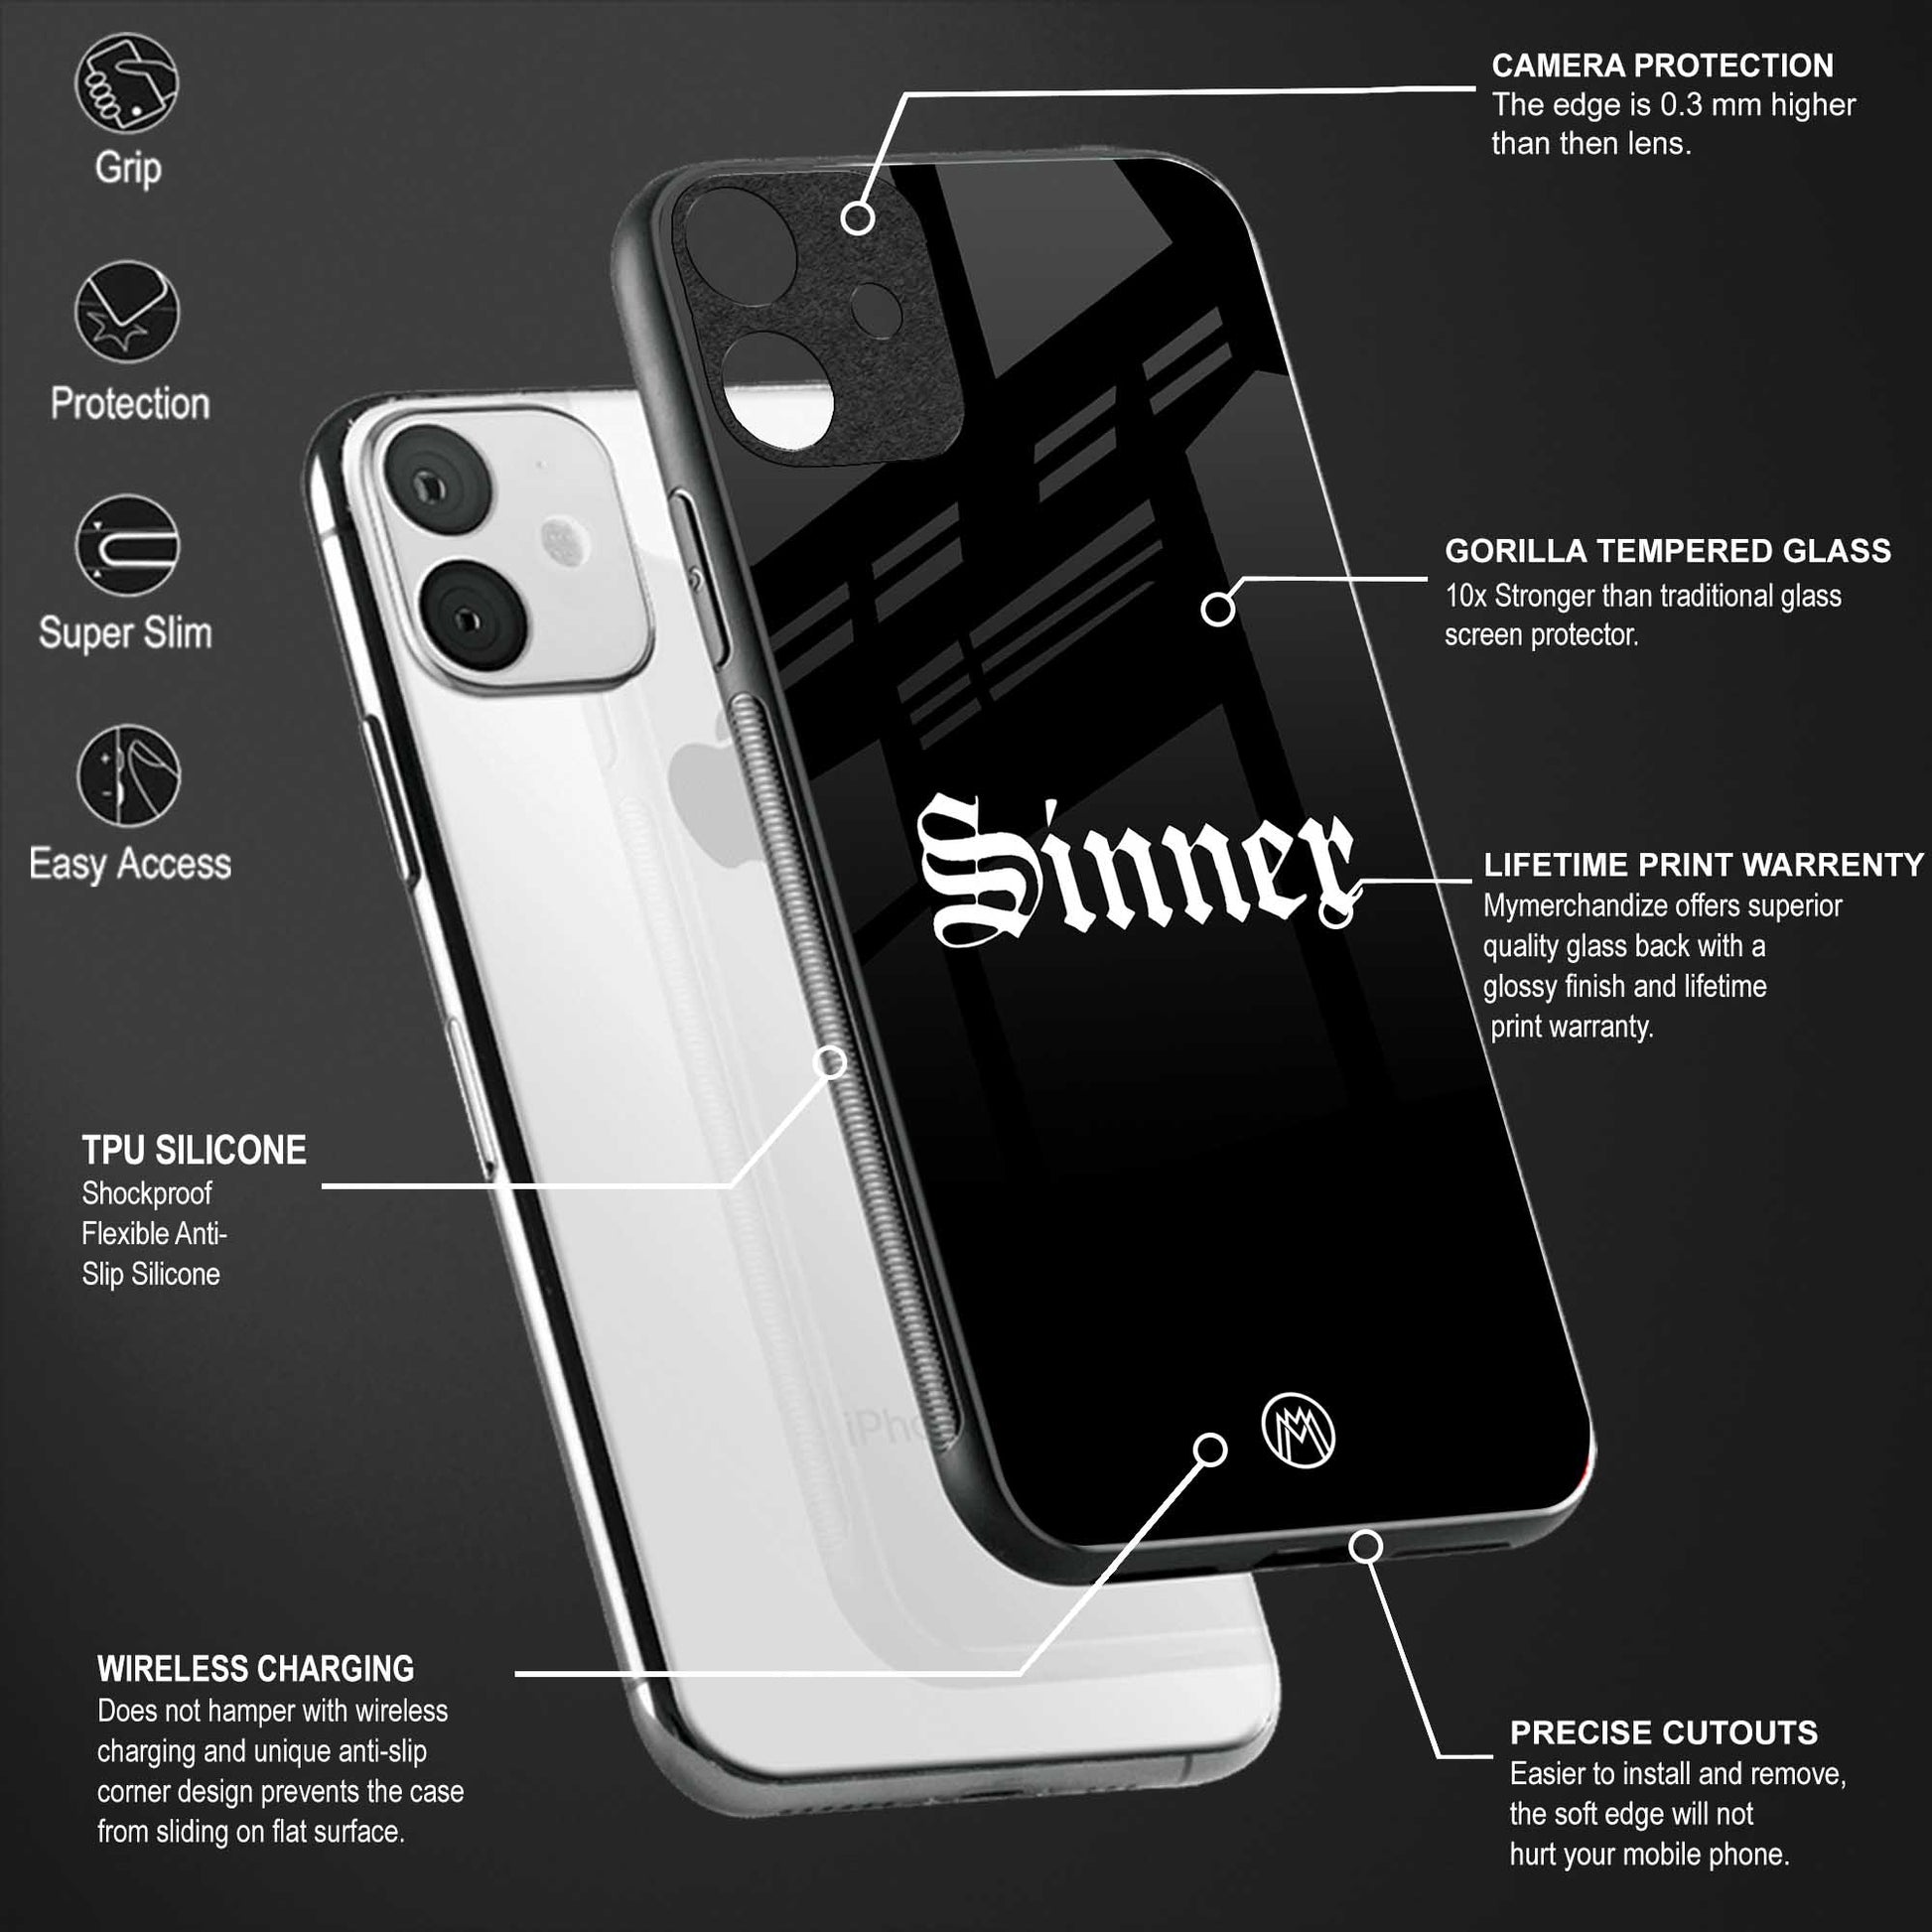 sinner back phone cover | glass case for samsun galaxy a24 4g